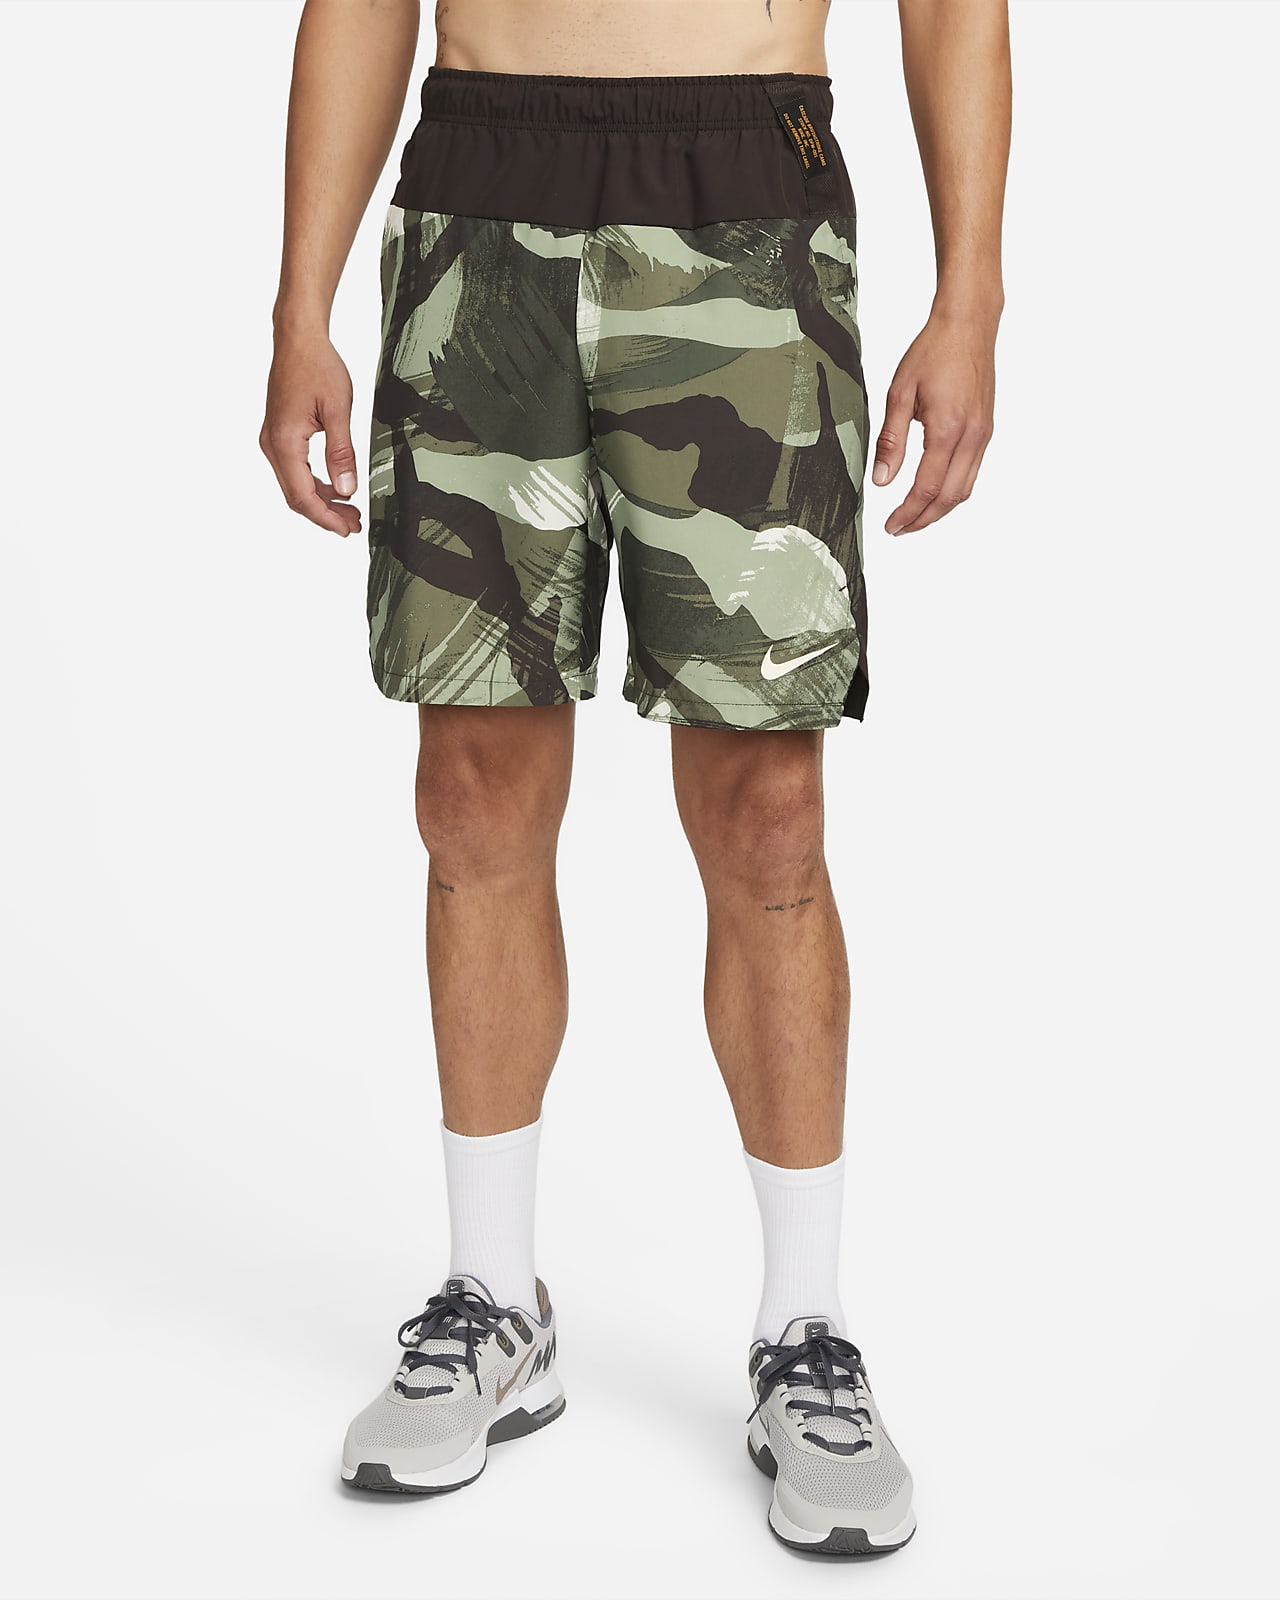 Nike Dri-FIT Flex Men's 9" (23cm approx.) Woven Camo Fitness Shorts